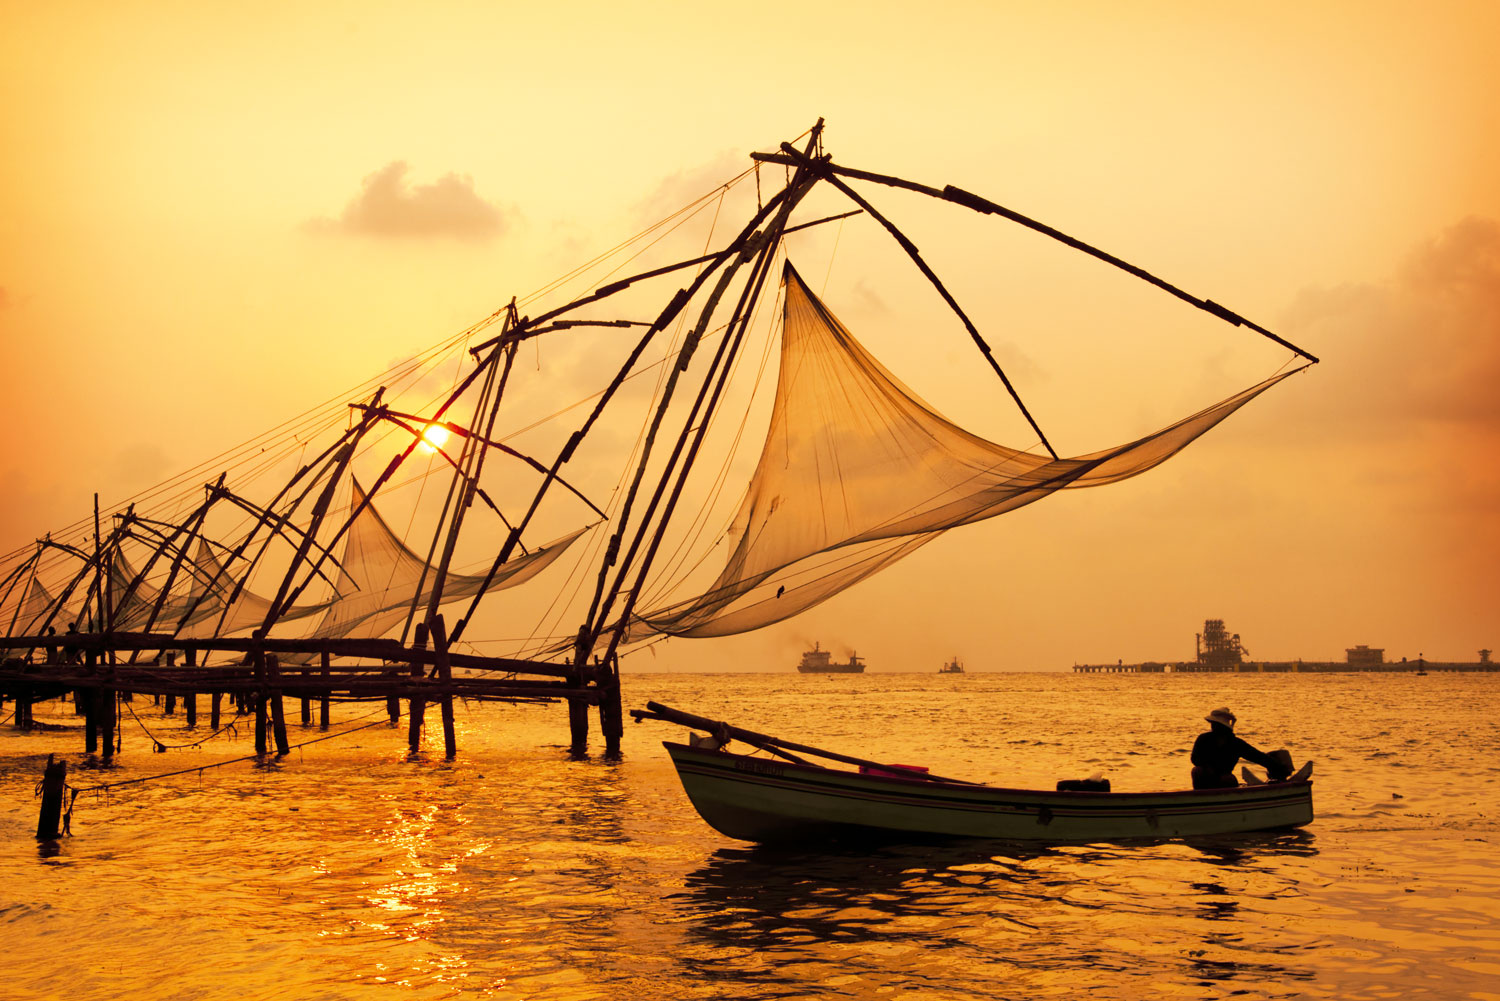 Sunset-over-Chinese-Fishing-nets-and-boat-in-Cochin-Kochi-Kerala-India-shutterstock_104171129